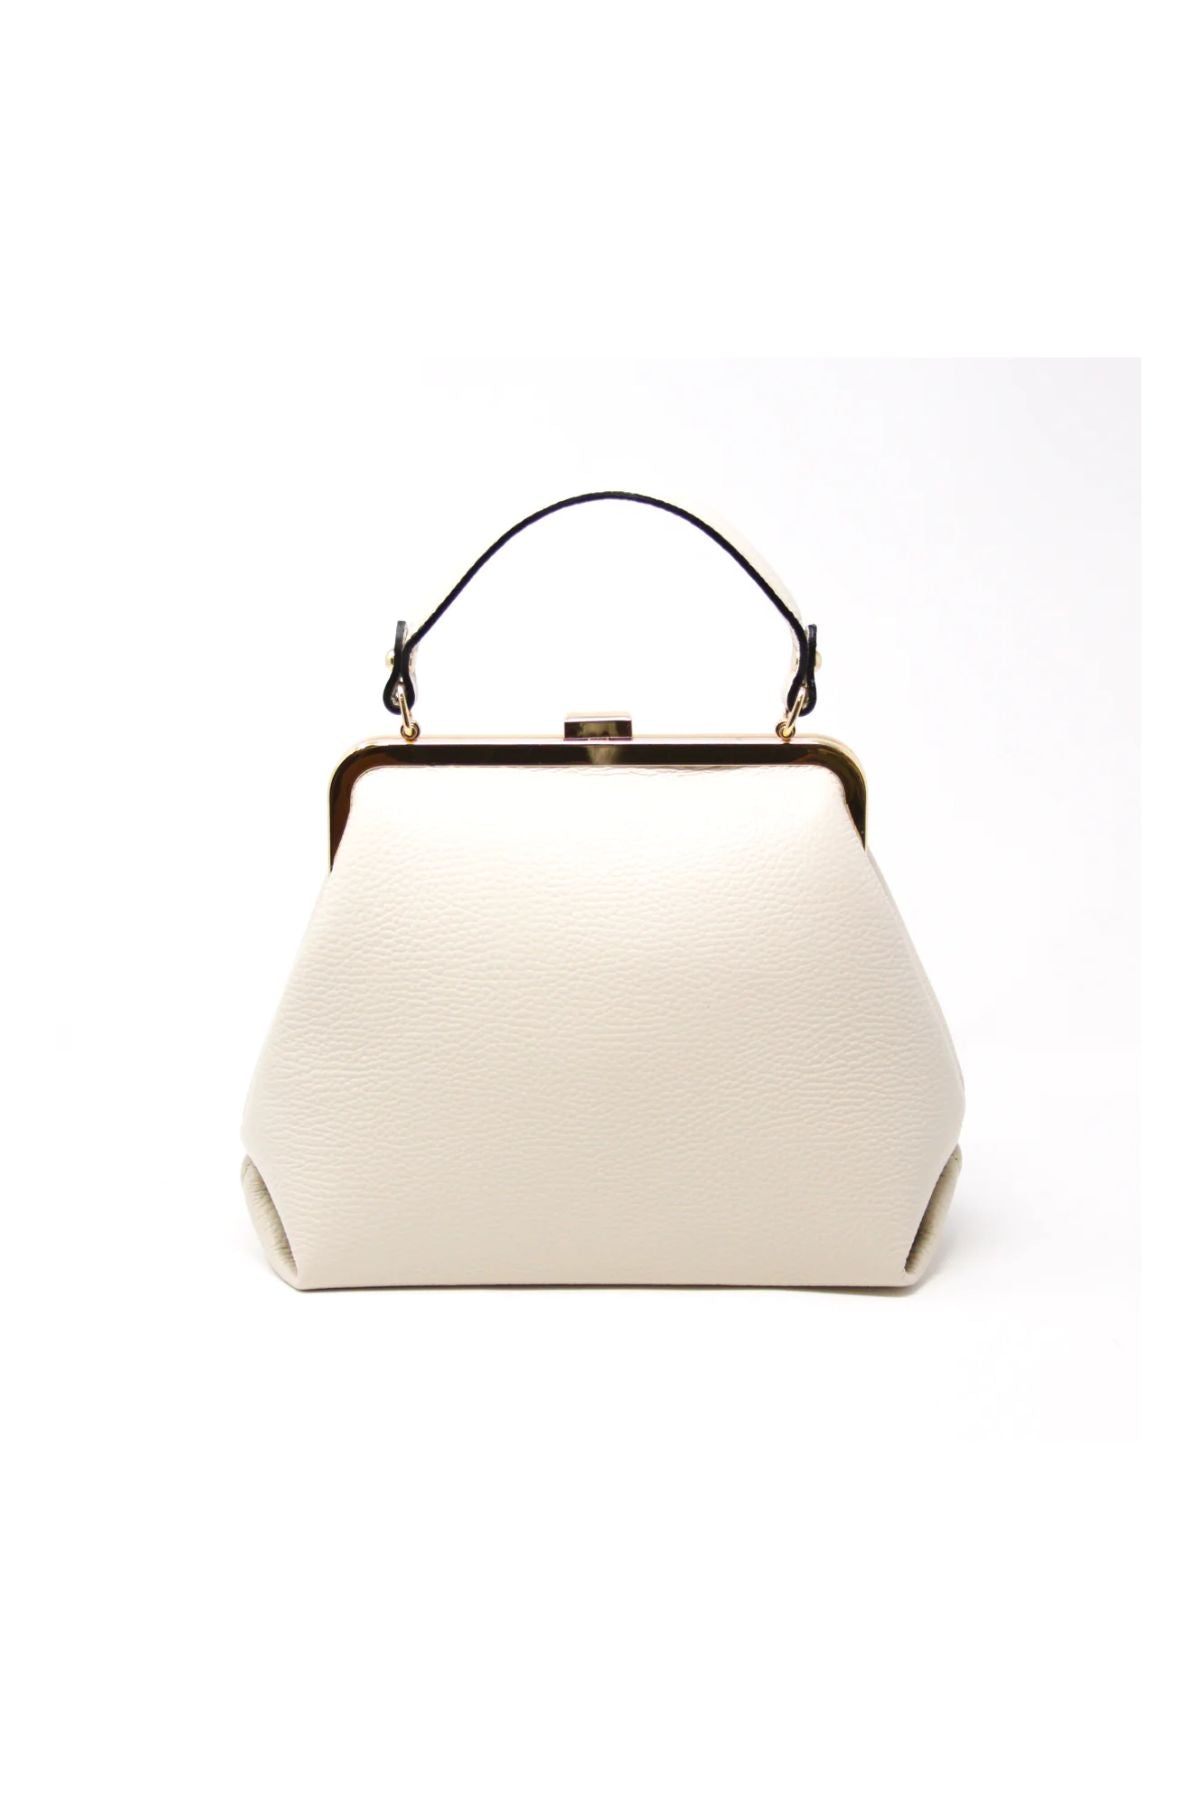 Beige leather handbag with top handle